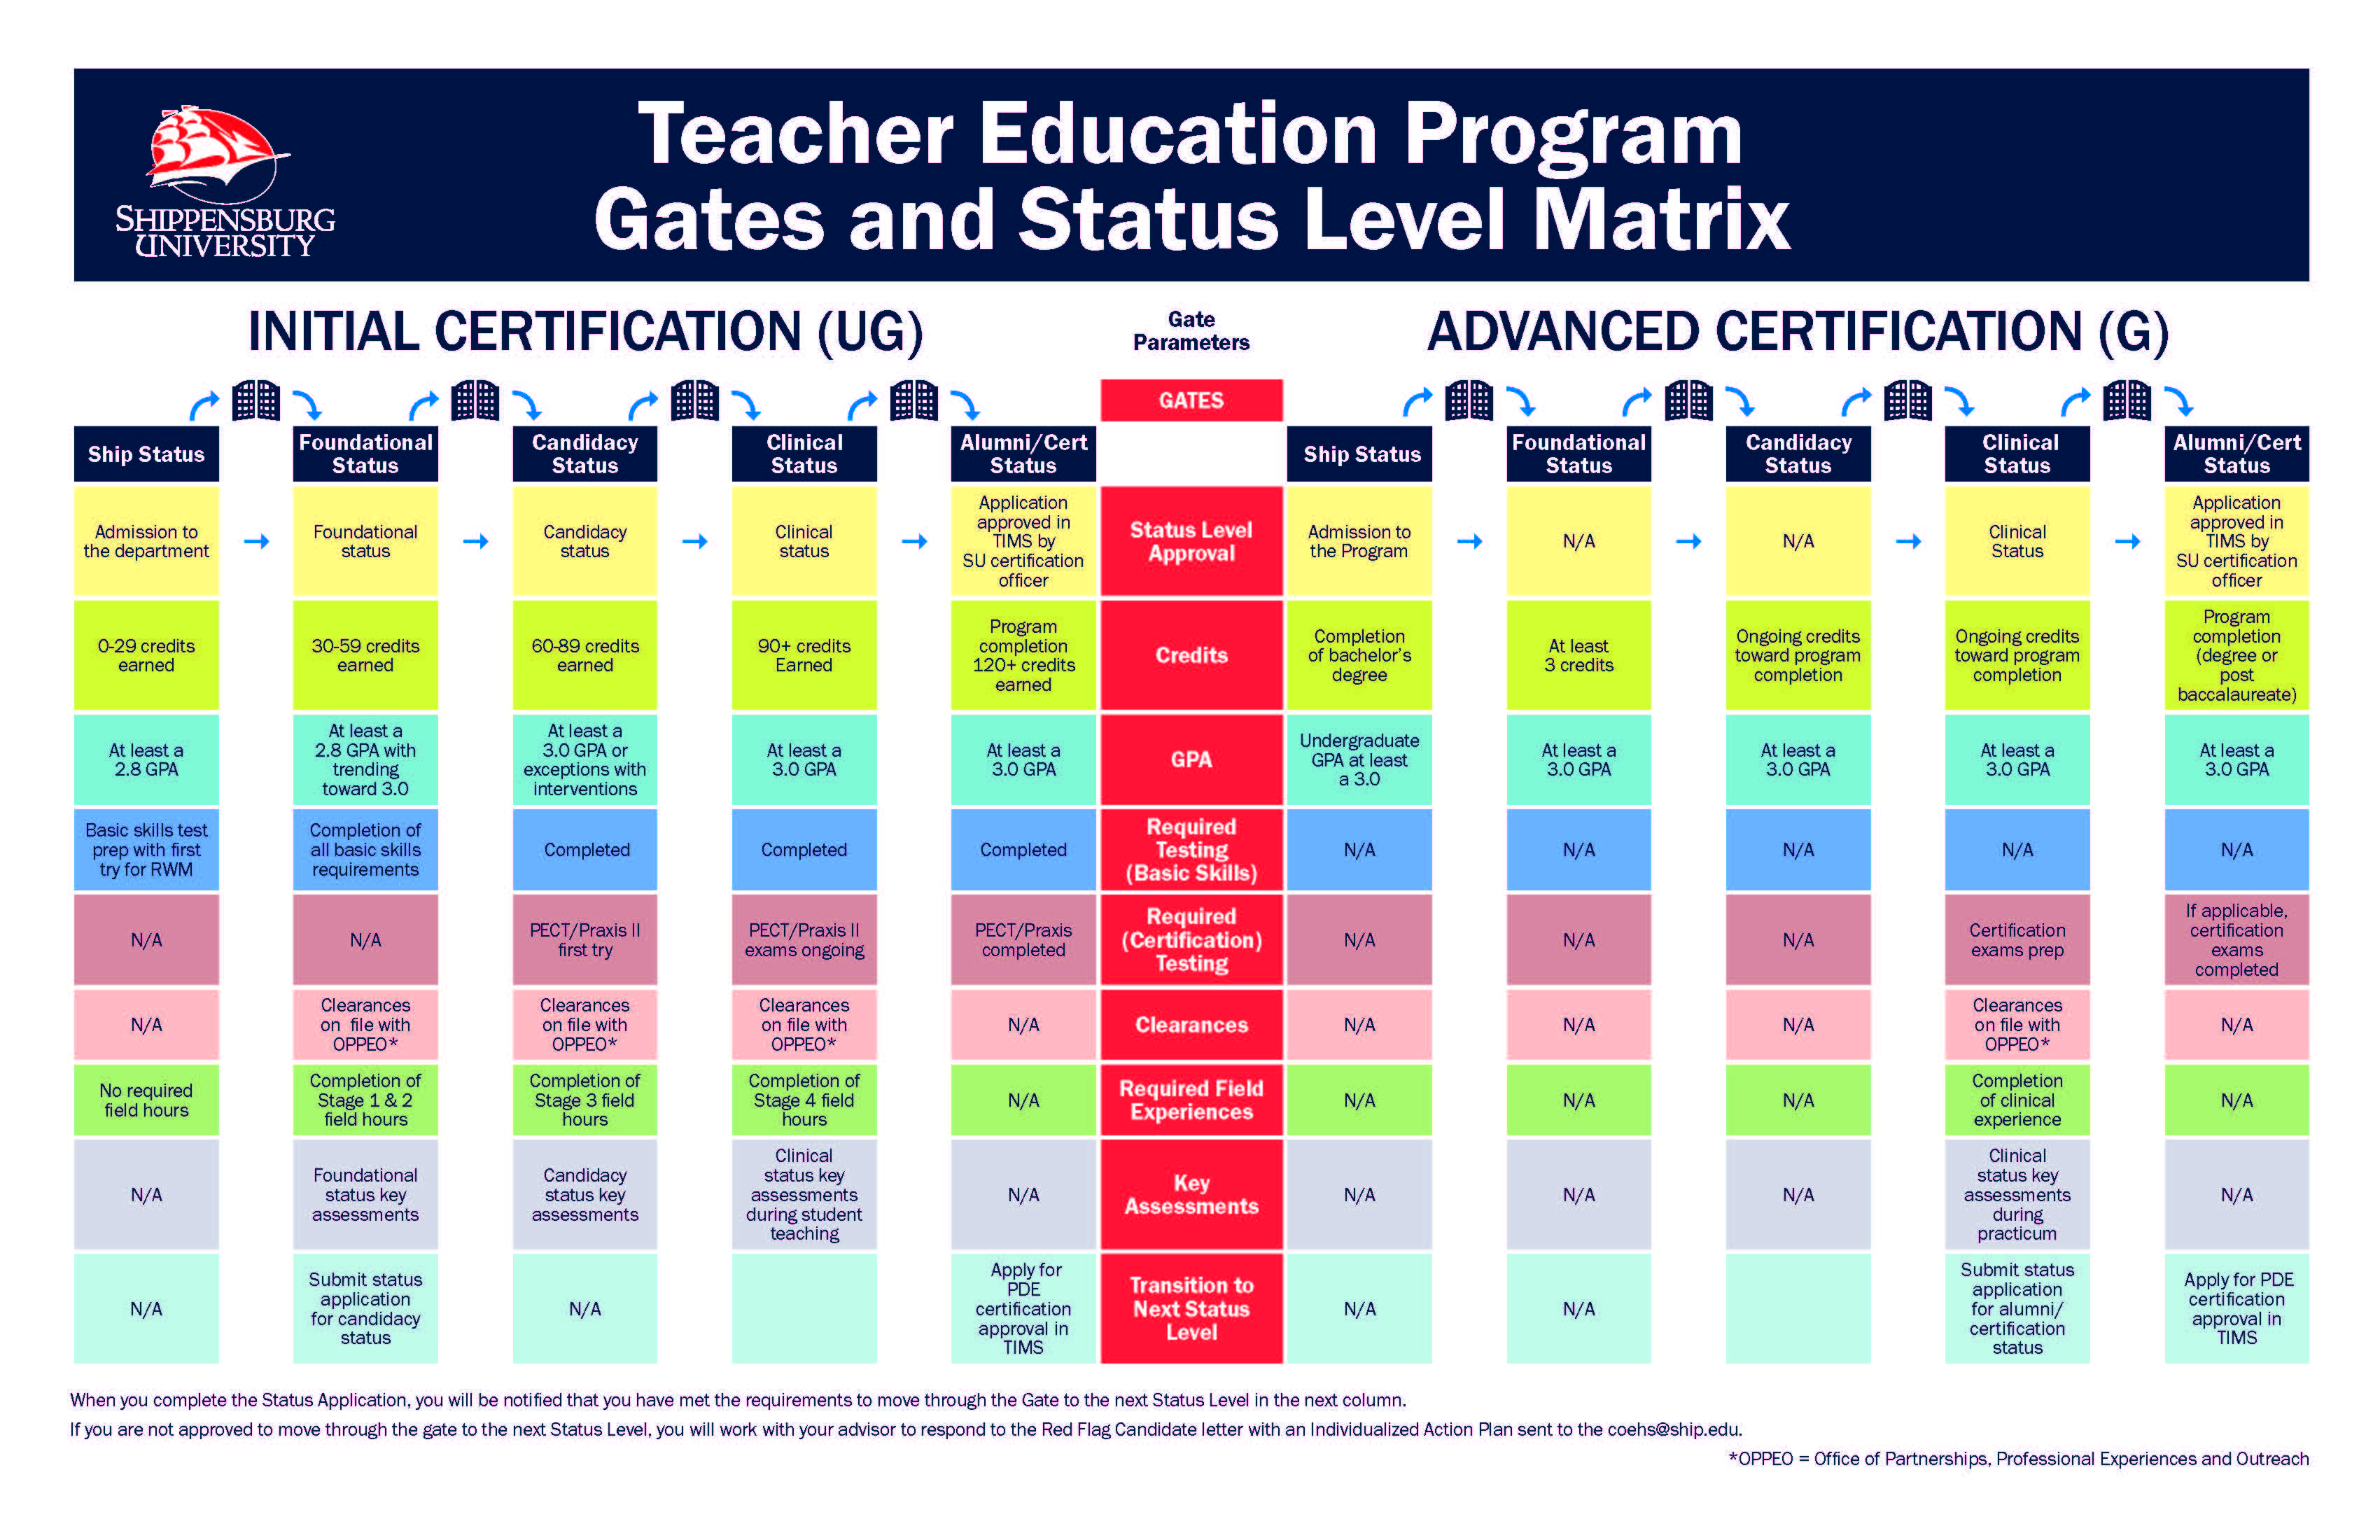 Teacher education program gates and status level matrix